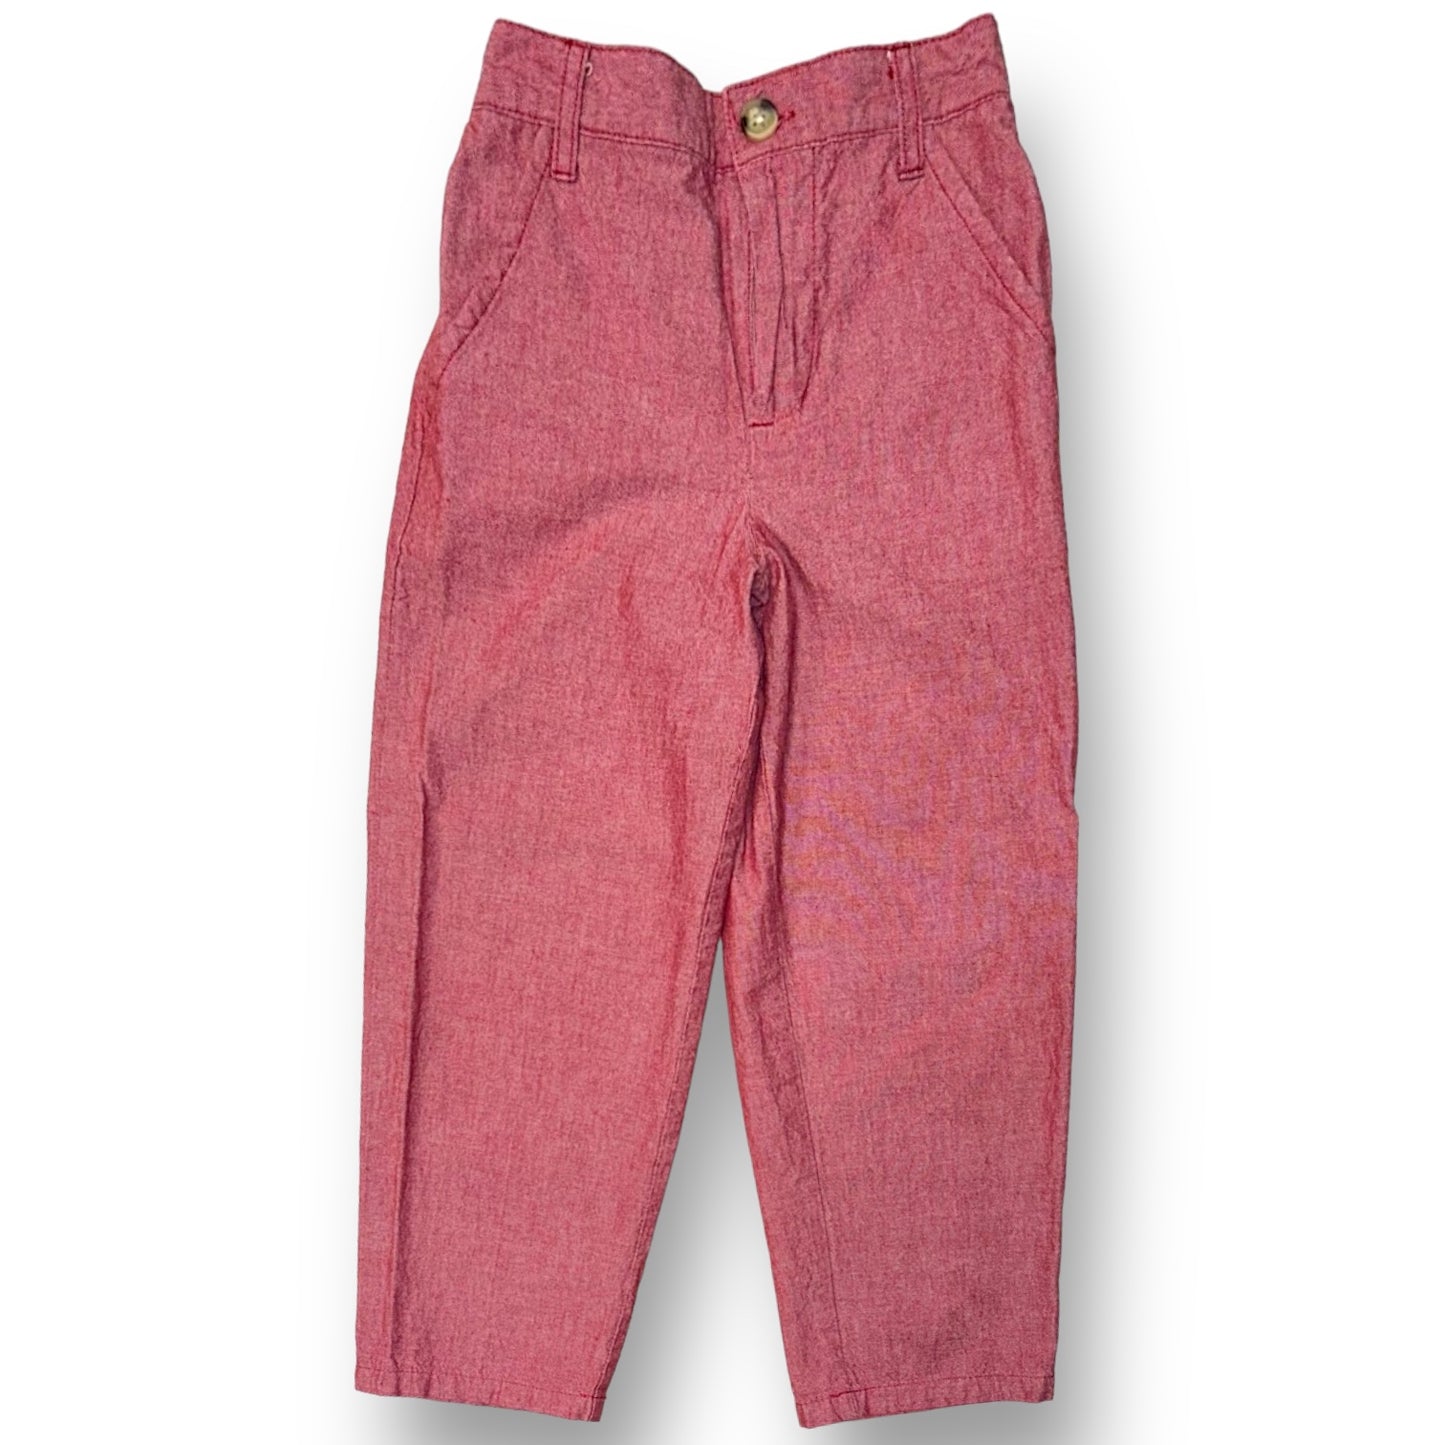 Boys Size 5 Light Red Cotton Blend Preppy Fit Casual Dress Pants